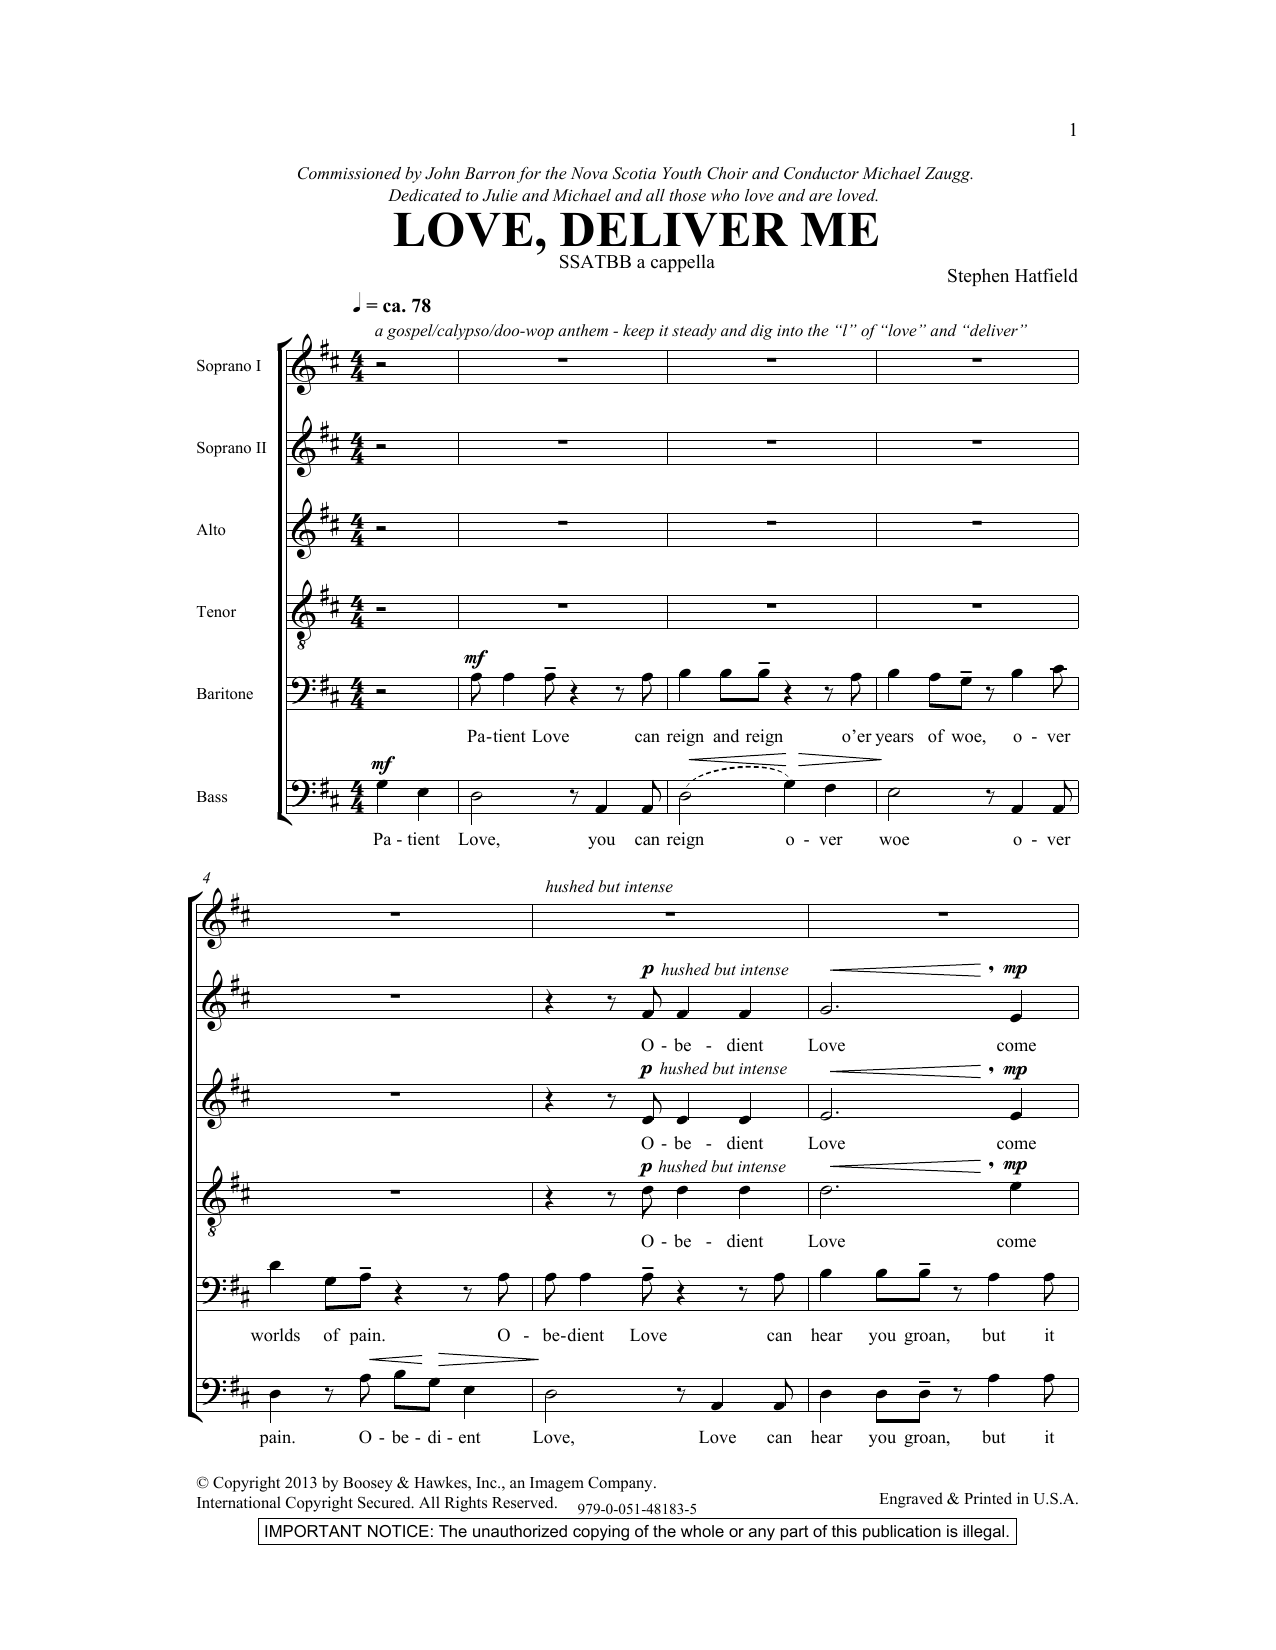 Stephen Hatfield Love Deliver Me Sheet Music Notes & Chords for SATB - Download or Print PDF